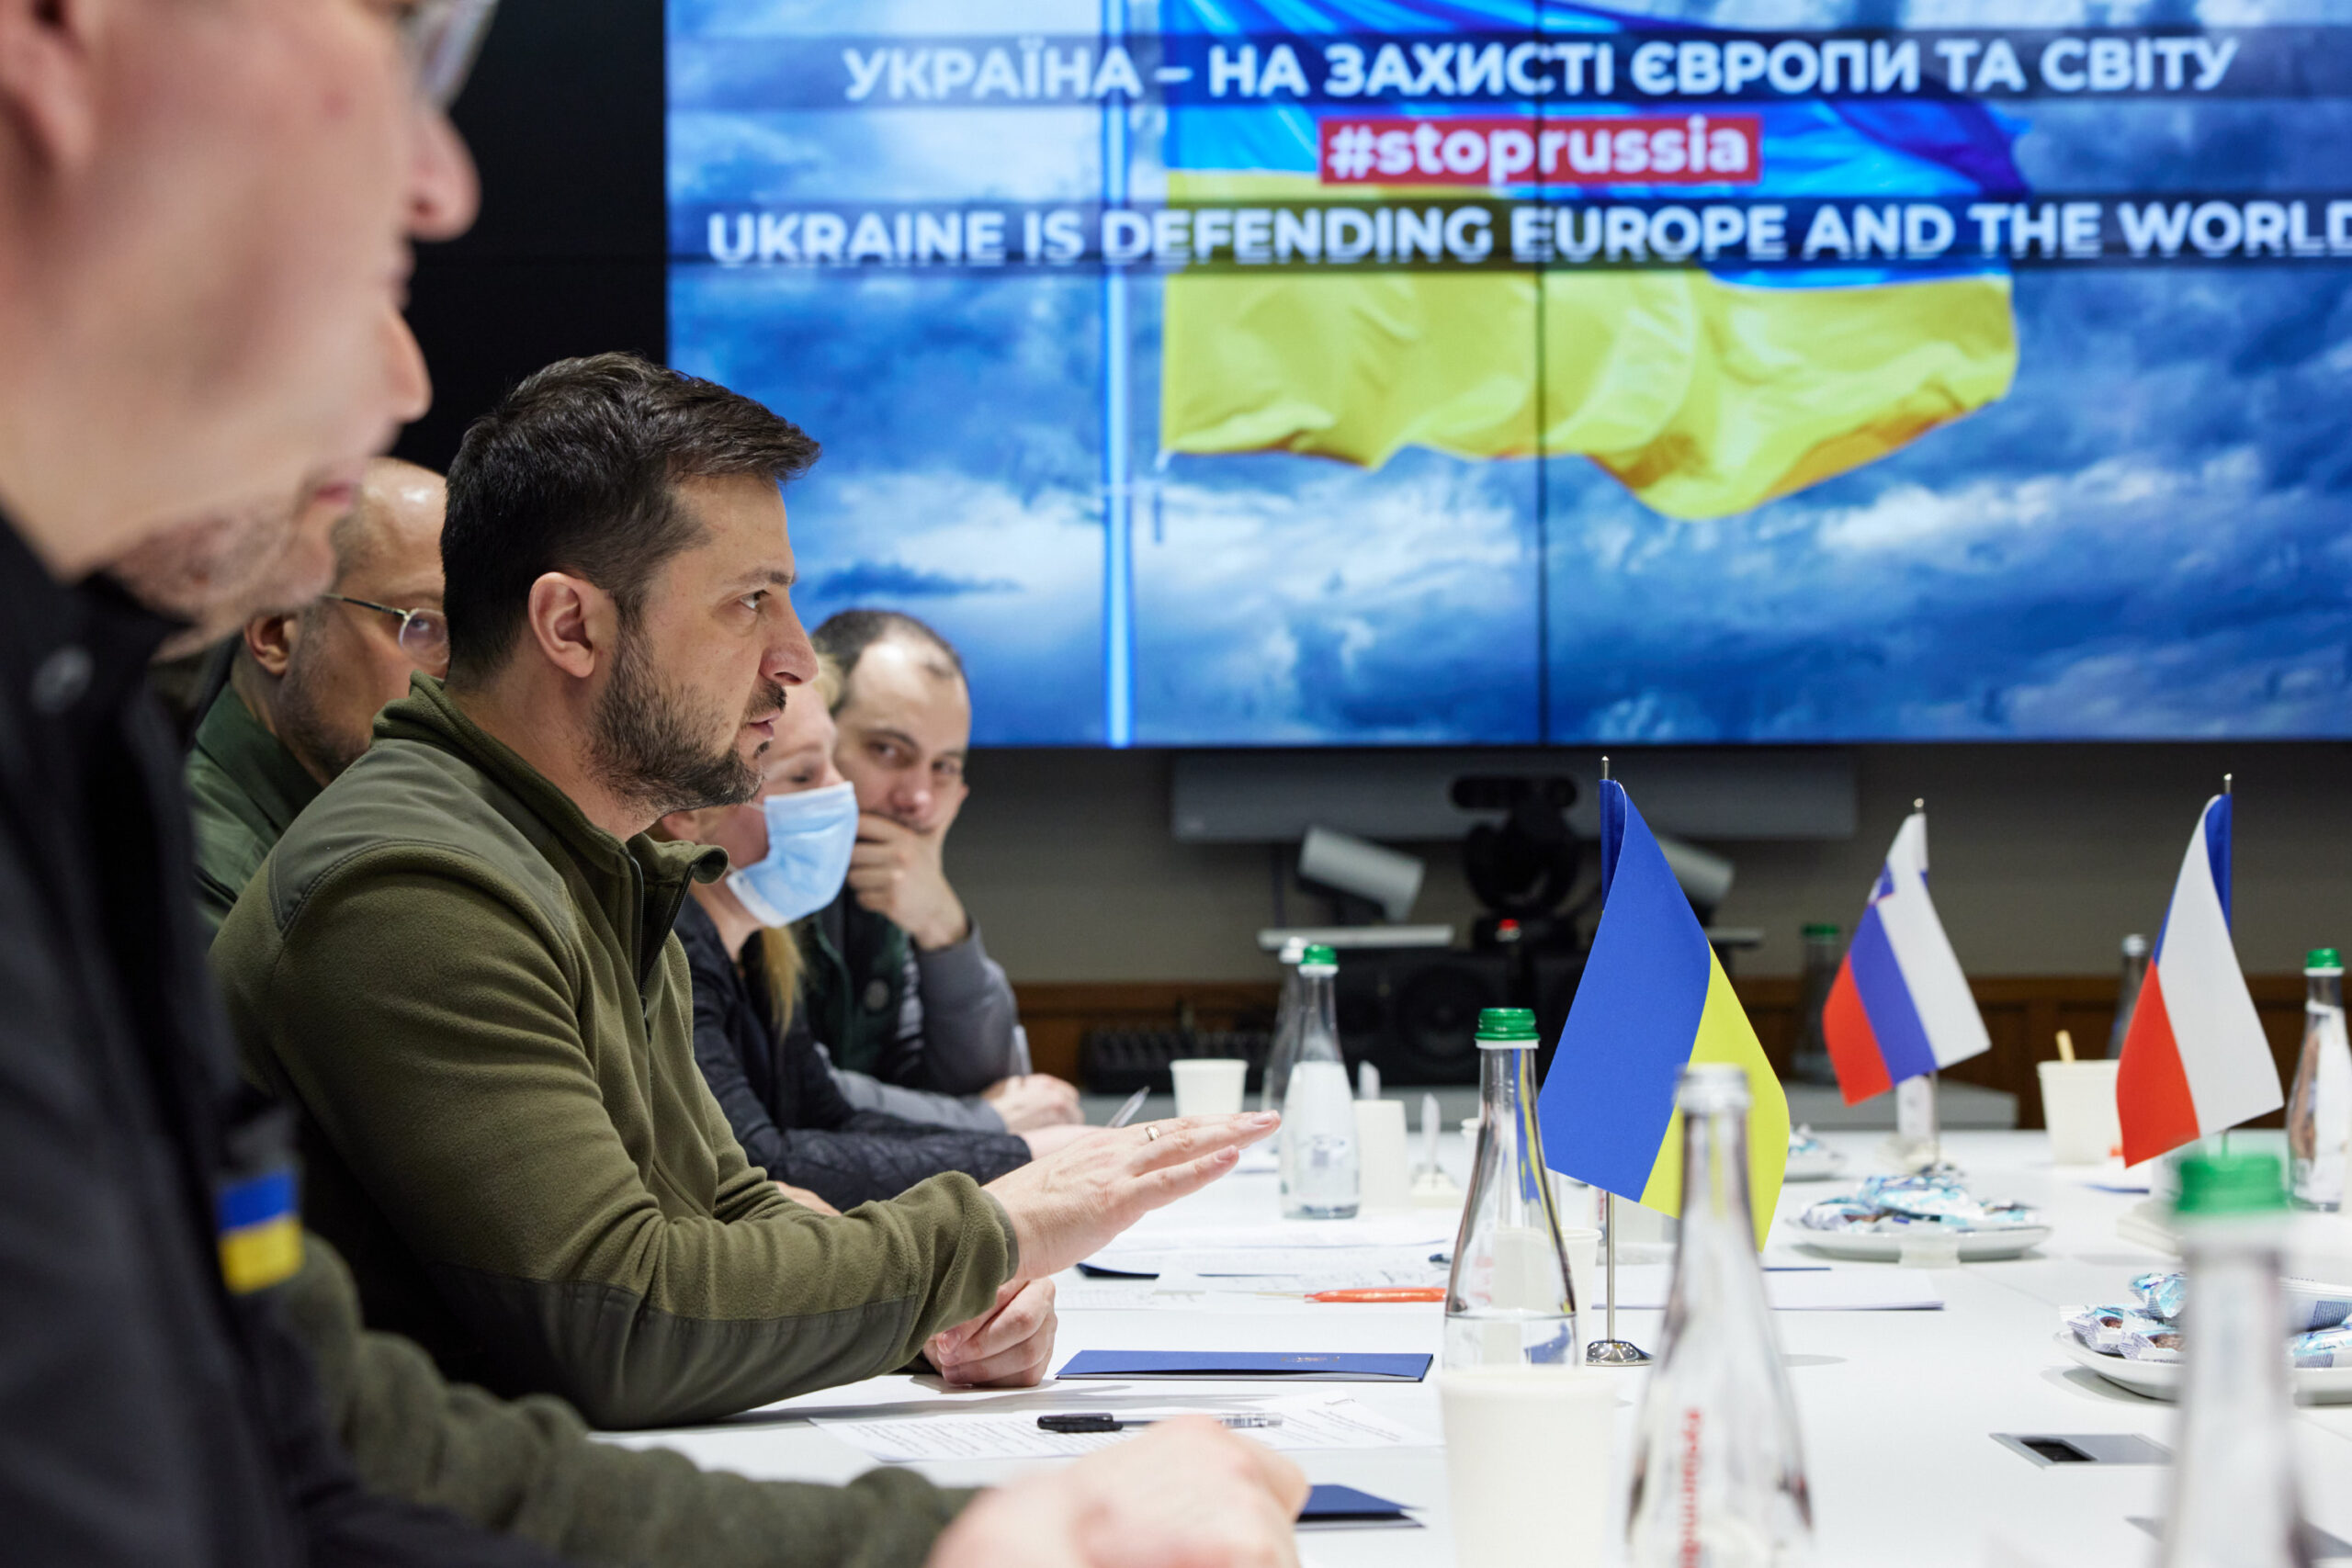 President Zelenskyy discussing Ukraine's defense with European leaders